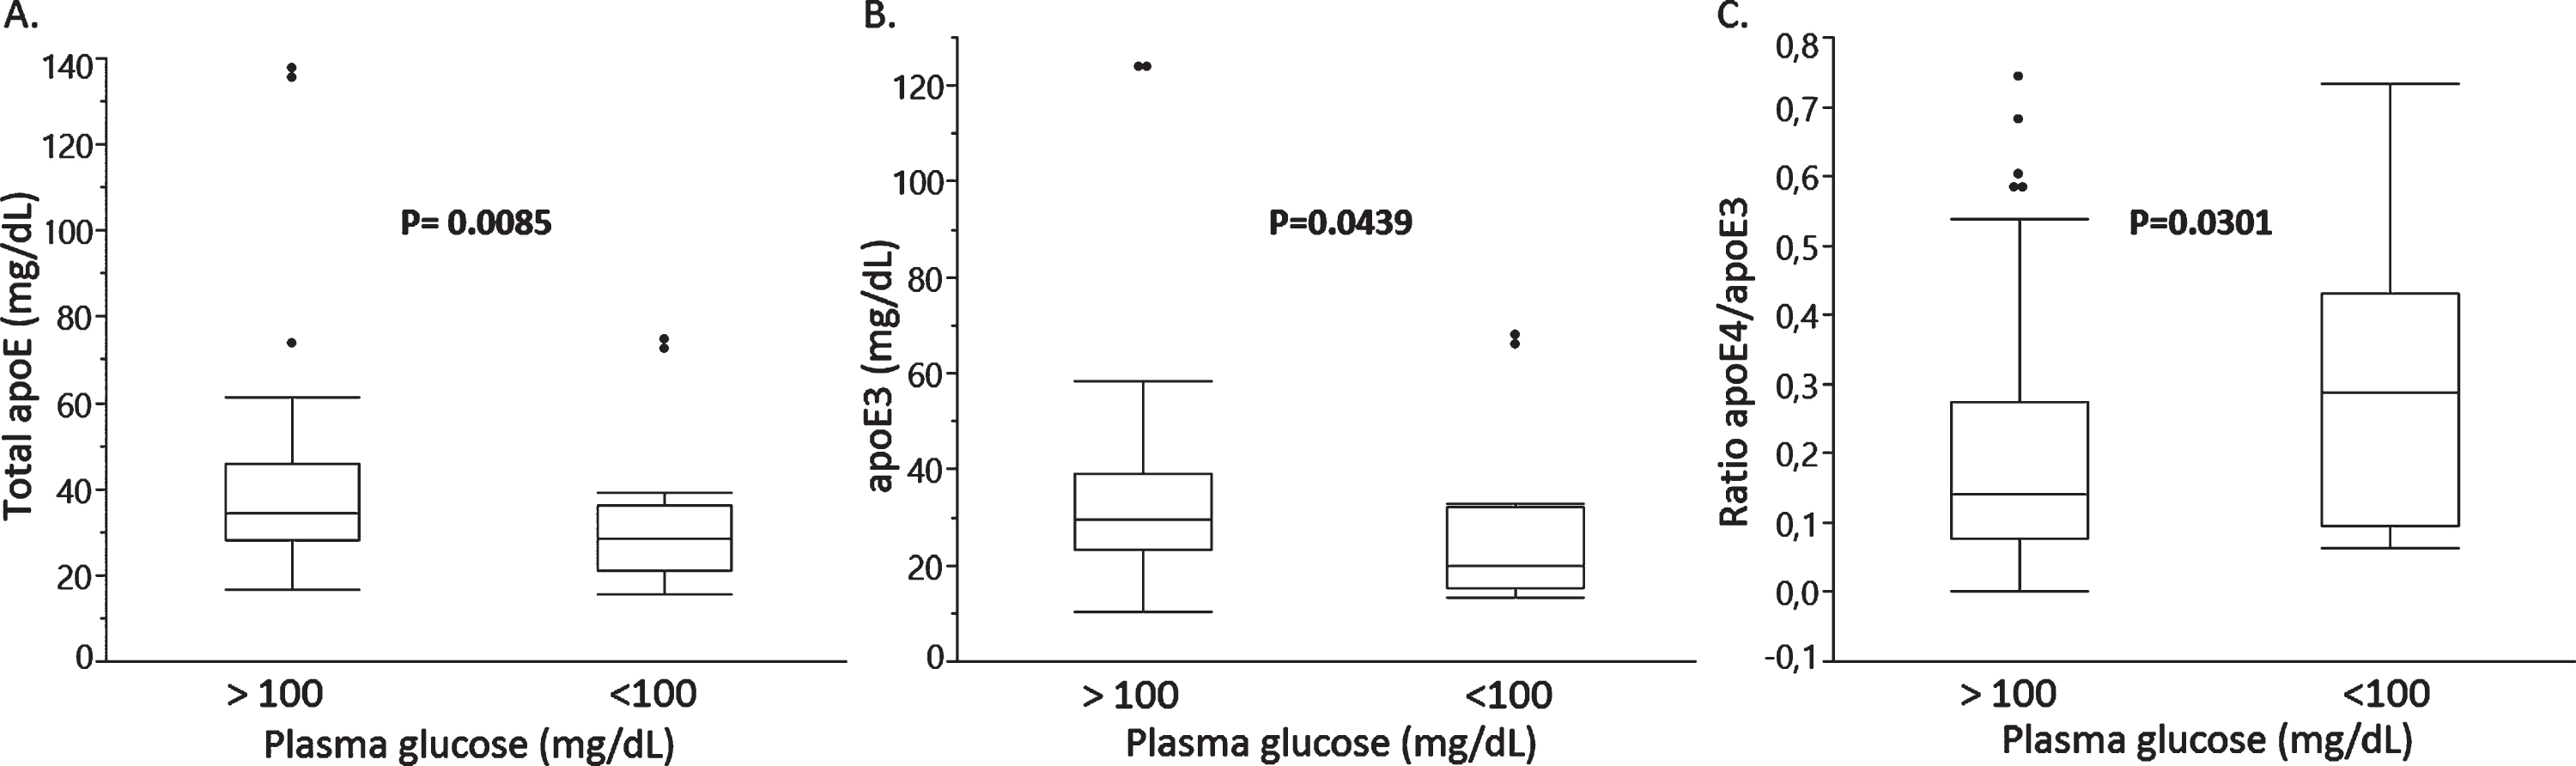 Total plasma apoE (A), plasma apoE3 (B) and a relative apoE4/apoE3 plasma isoform ratio in study subjects stratified based on plasma glucose cut-offs of 100 mg/dL.